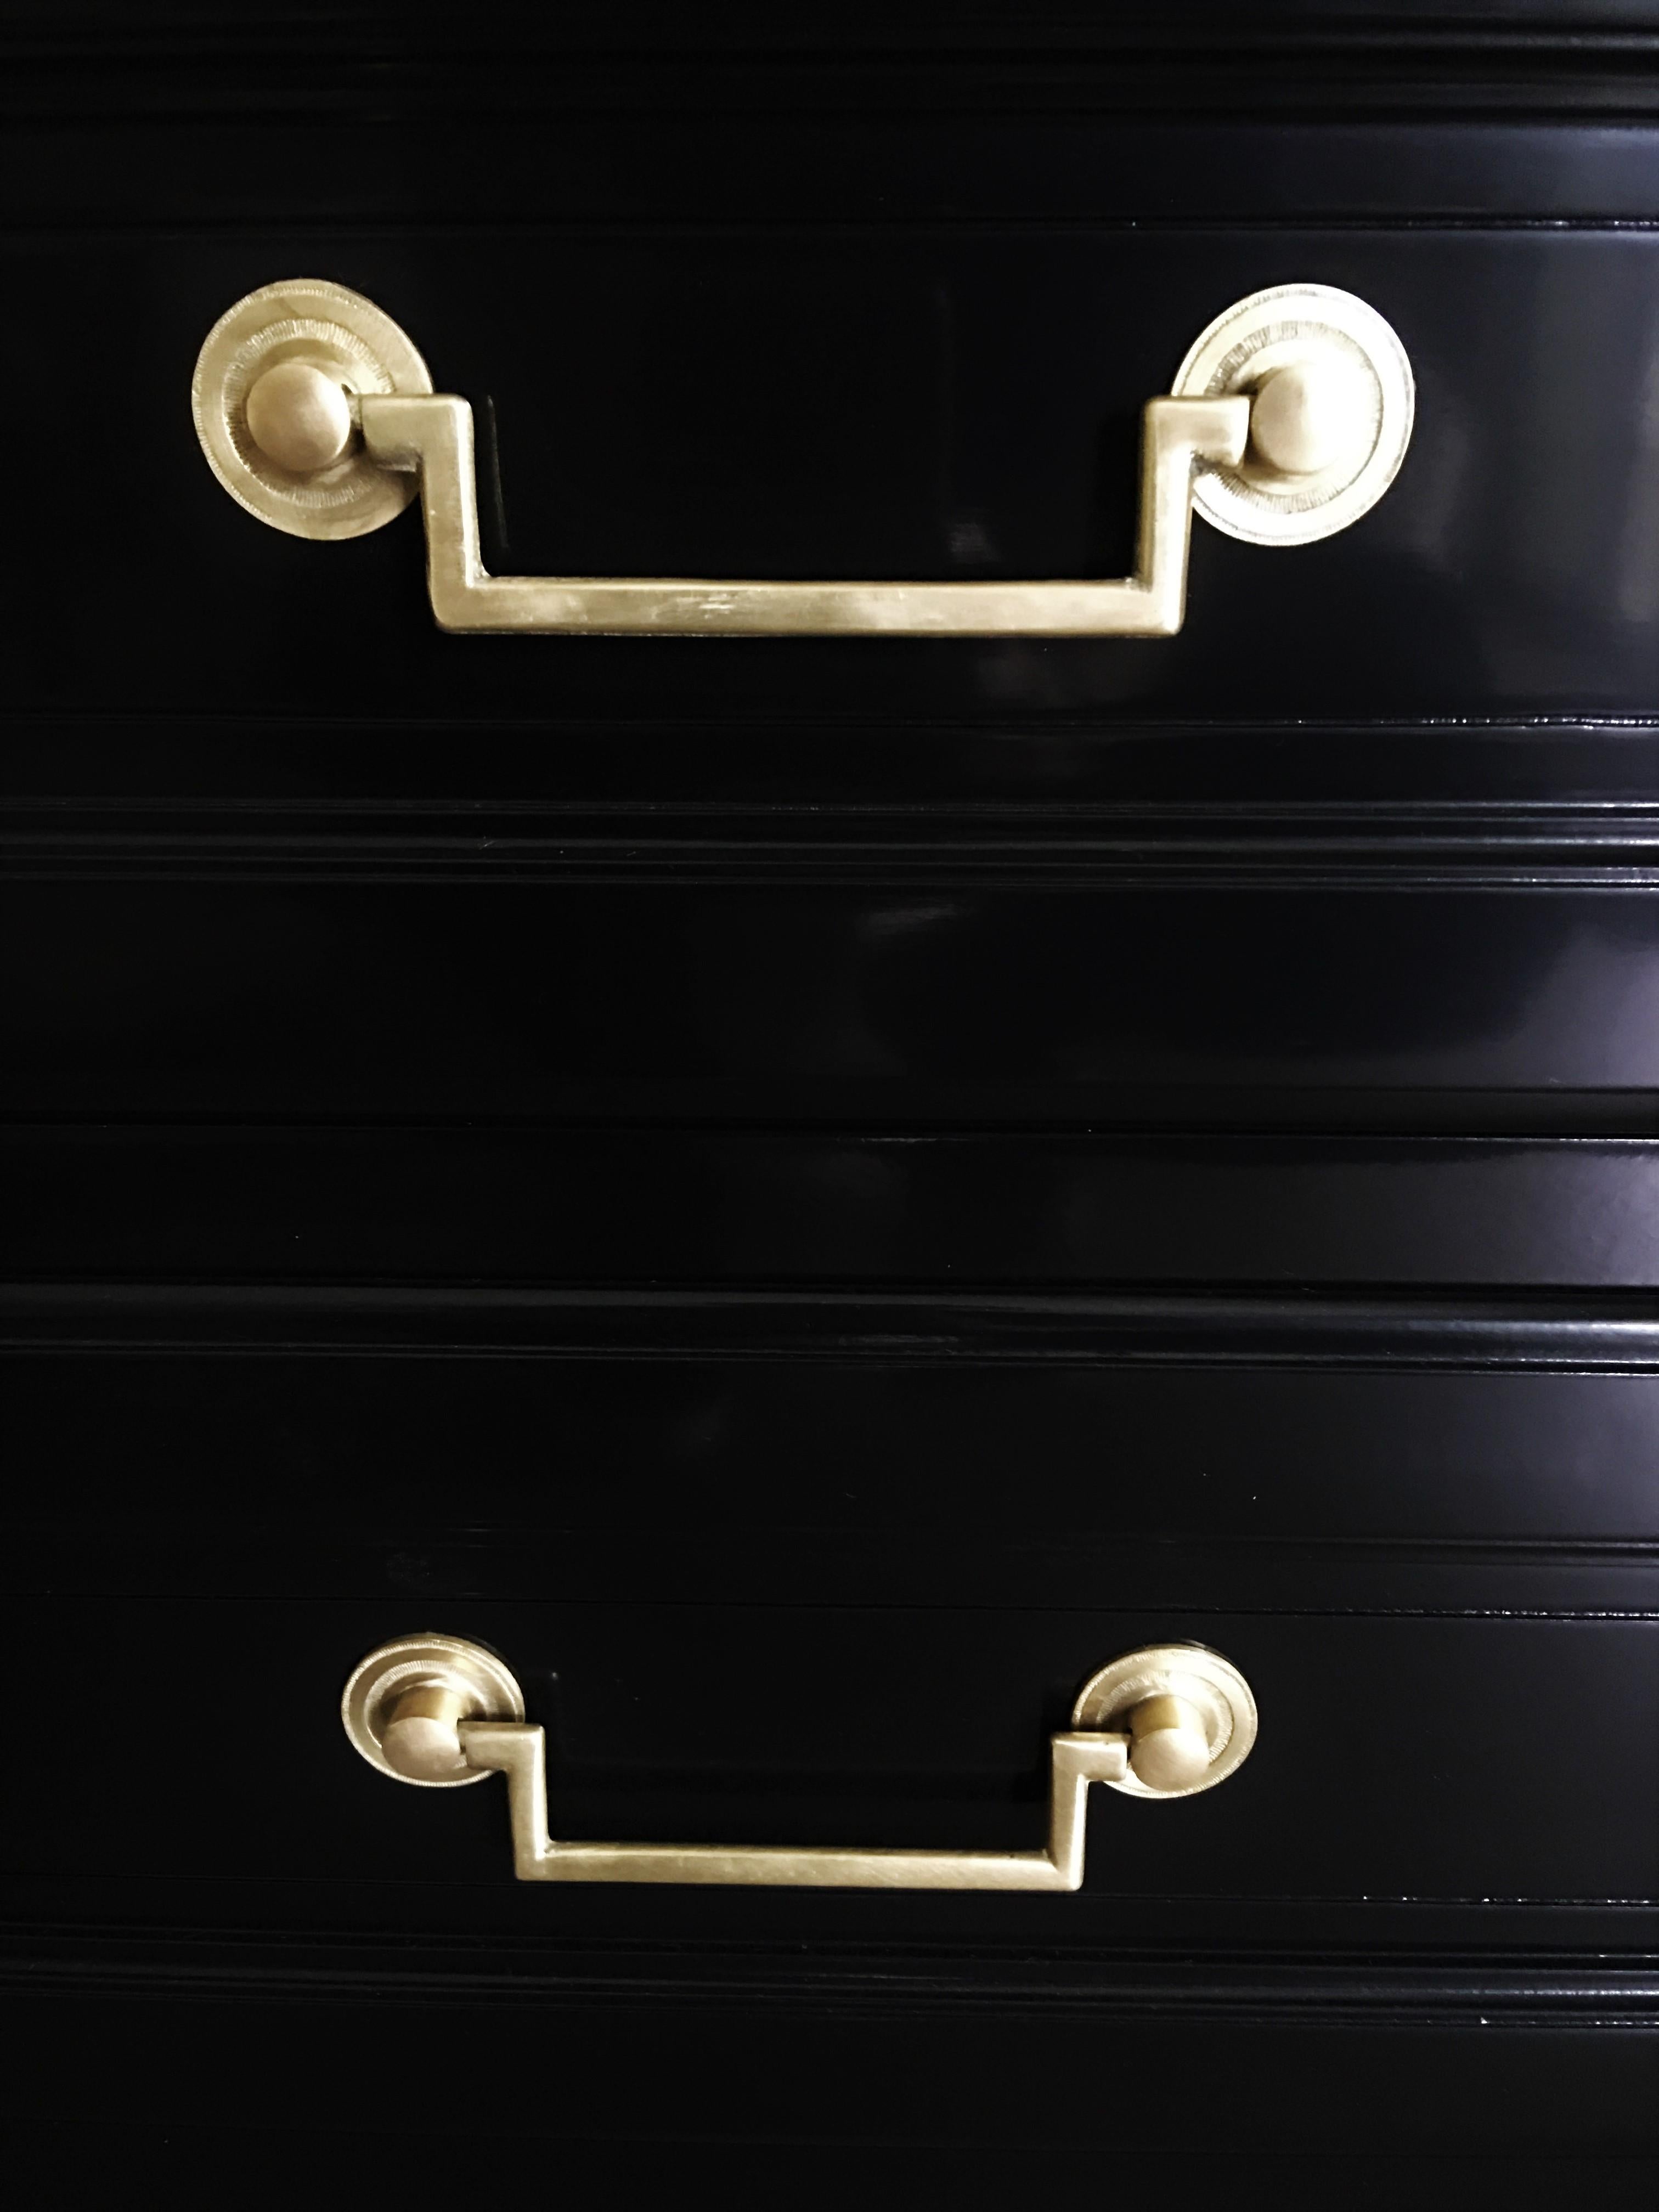 baker chest of drawers